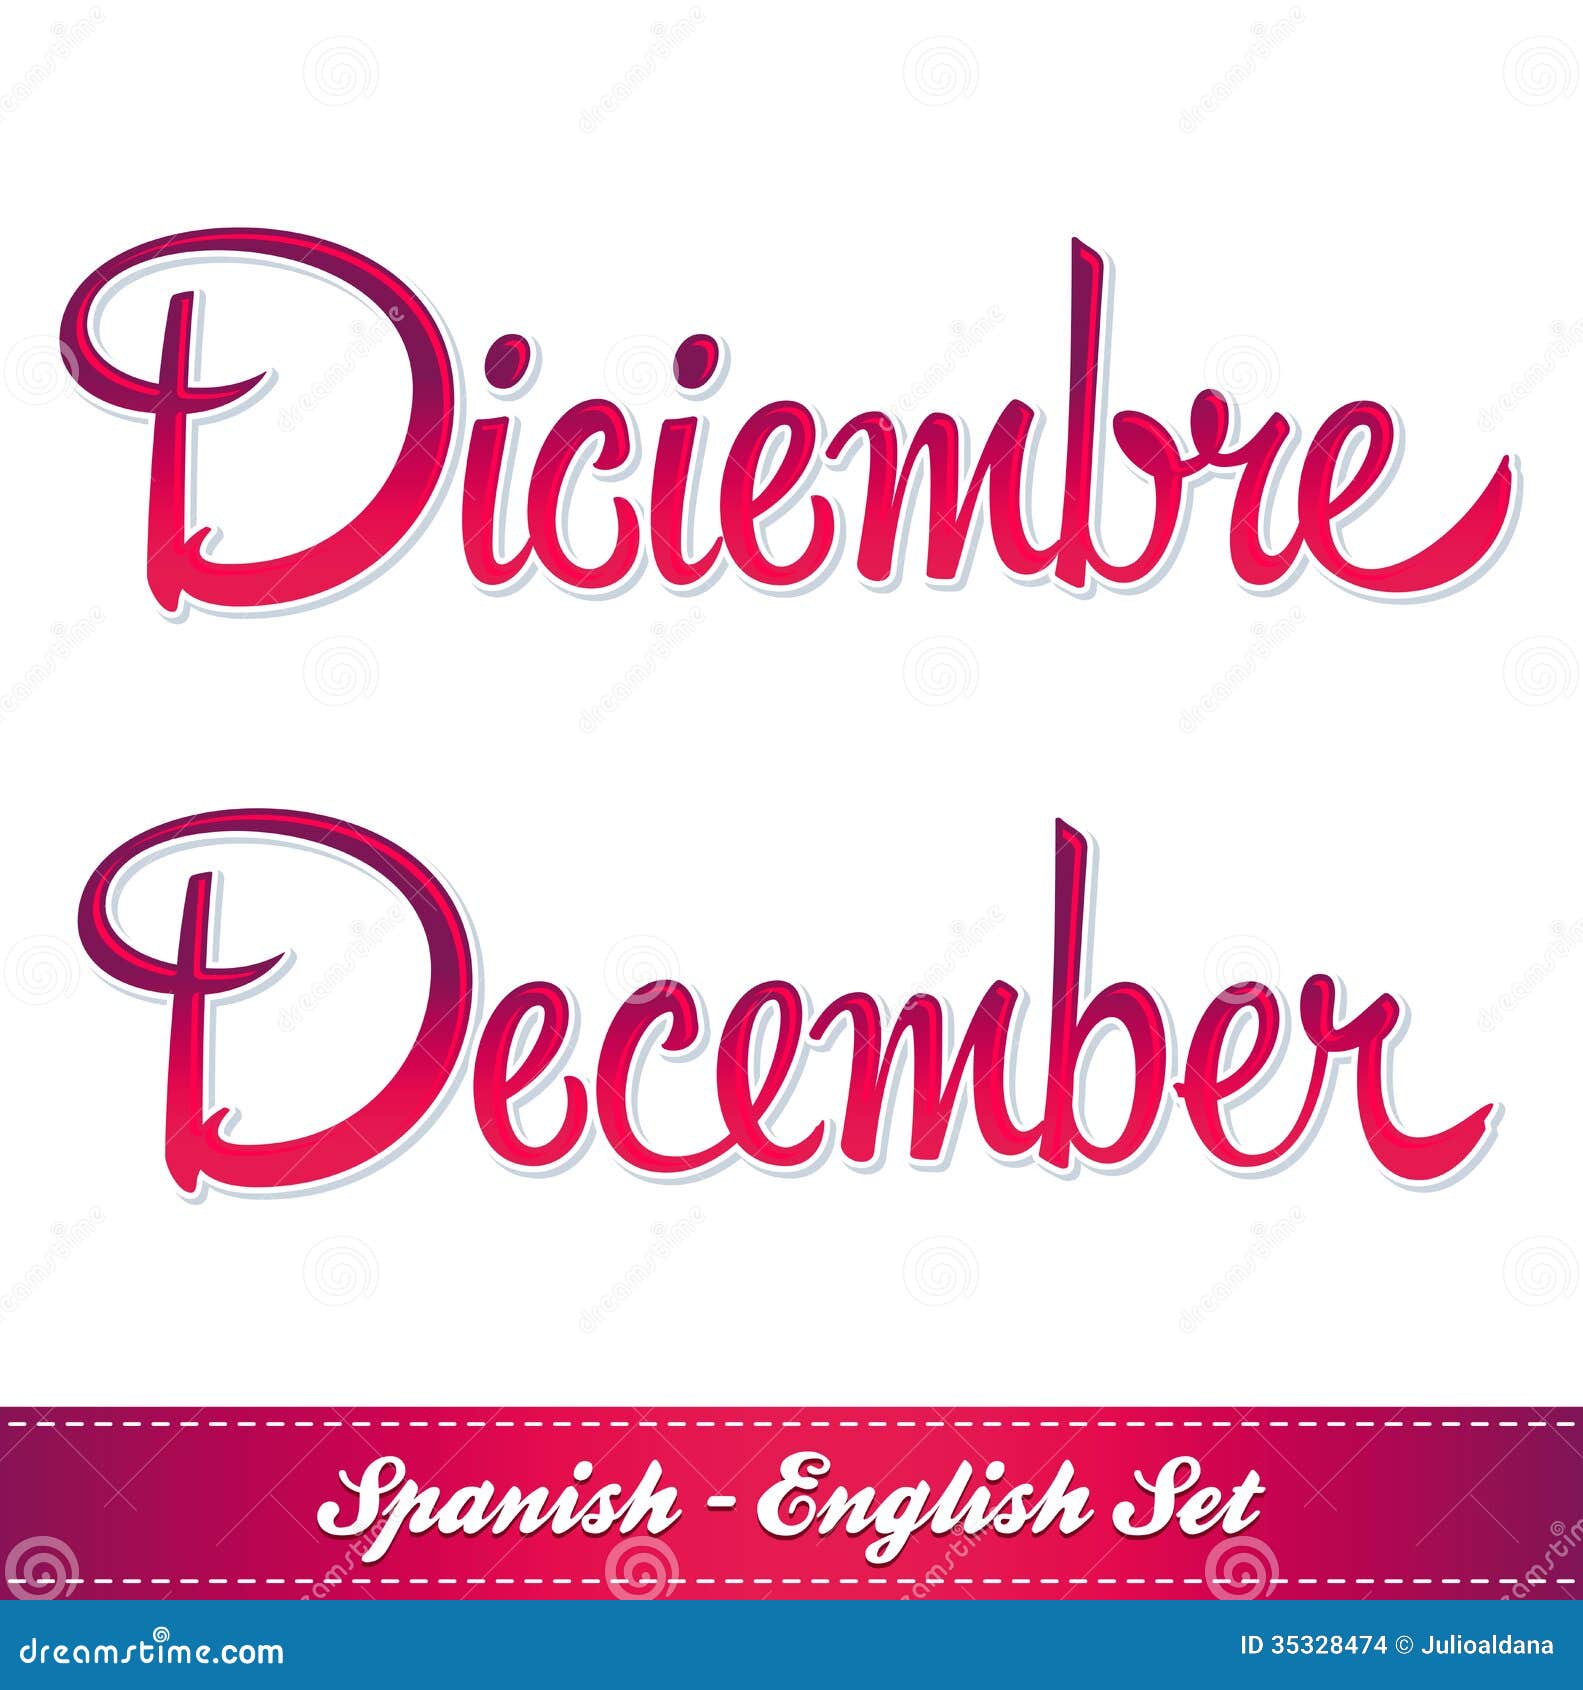 diciembre - december english and spanish